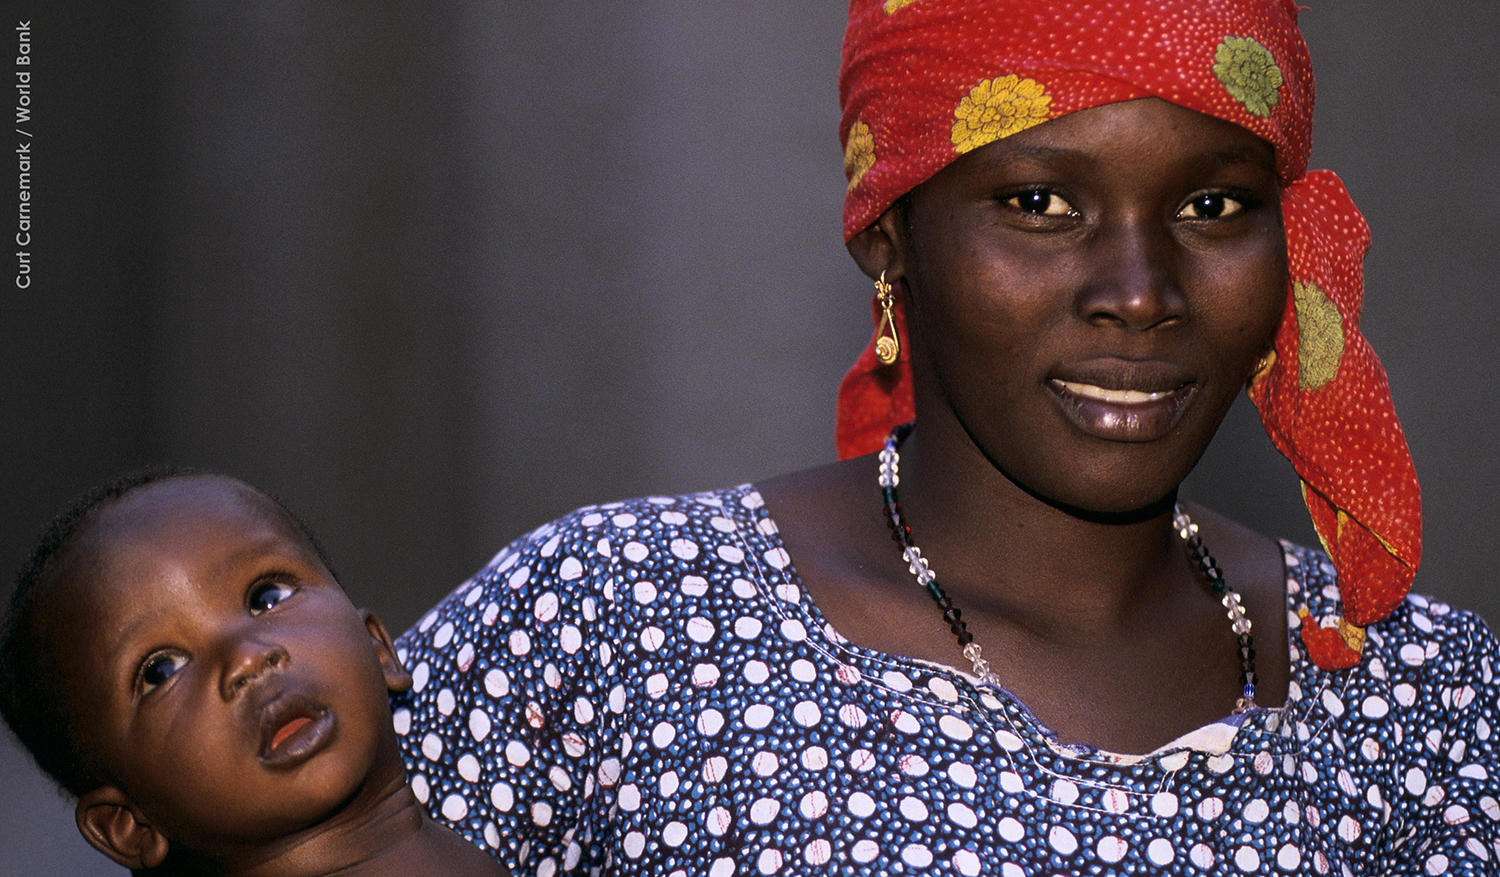 Mali_mother_and_child_Curt_Carnemark_World Bank